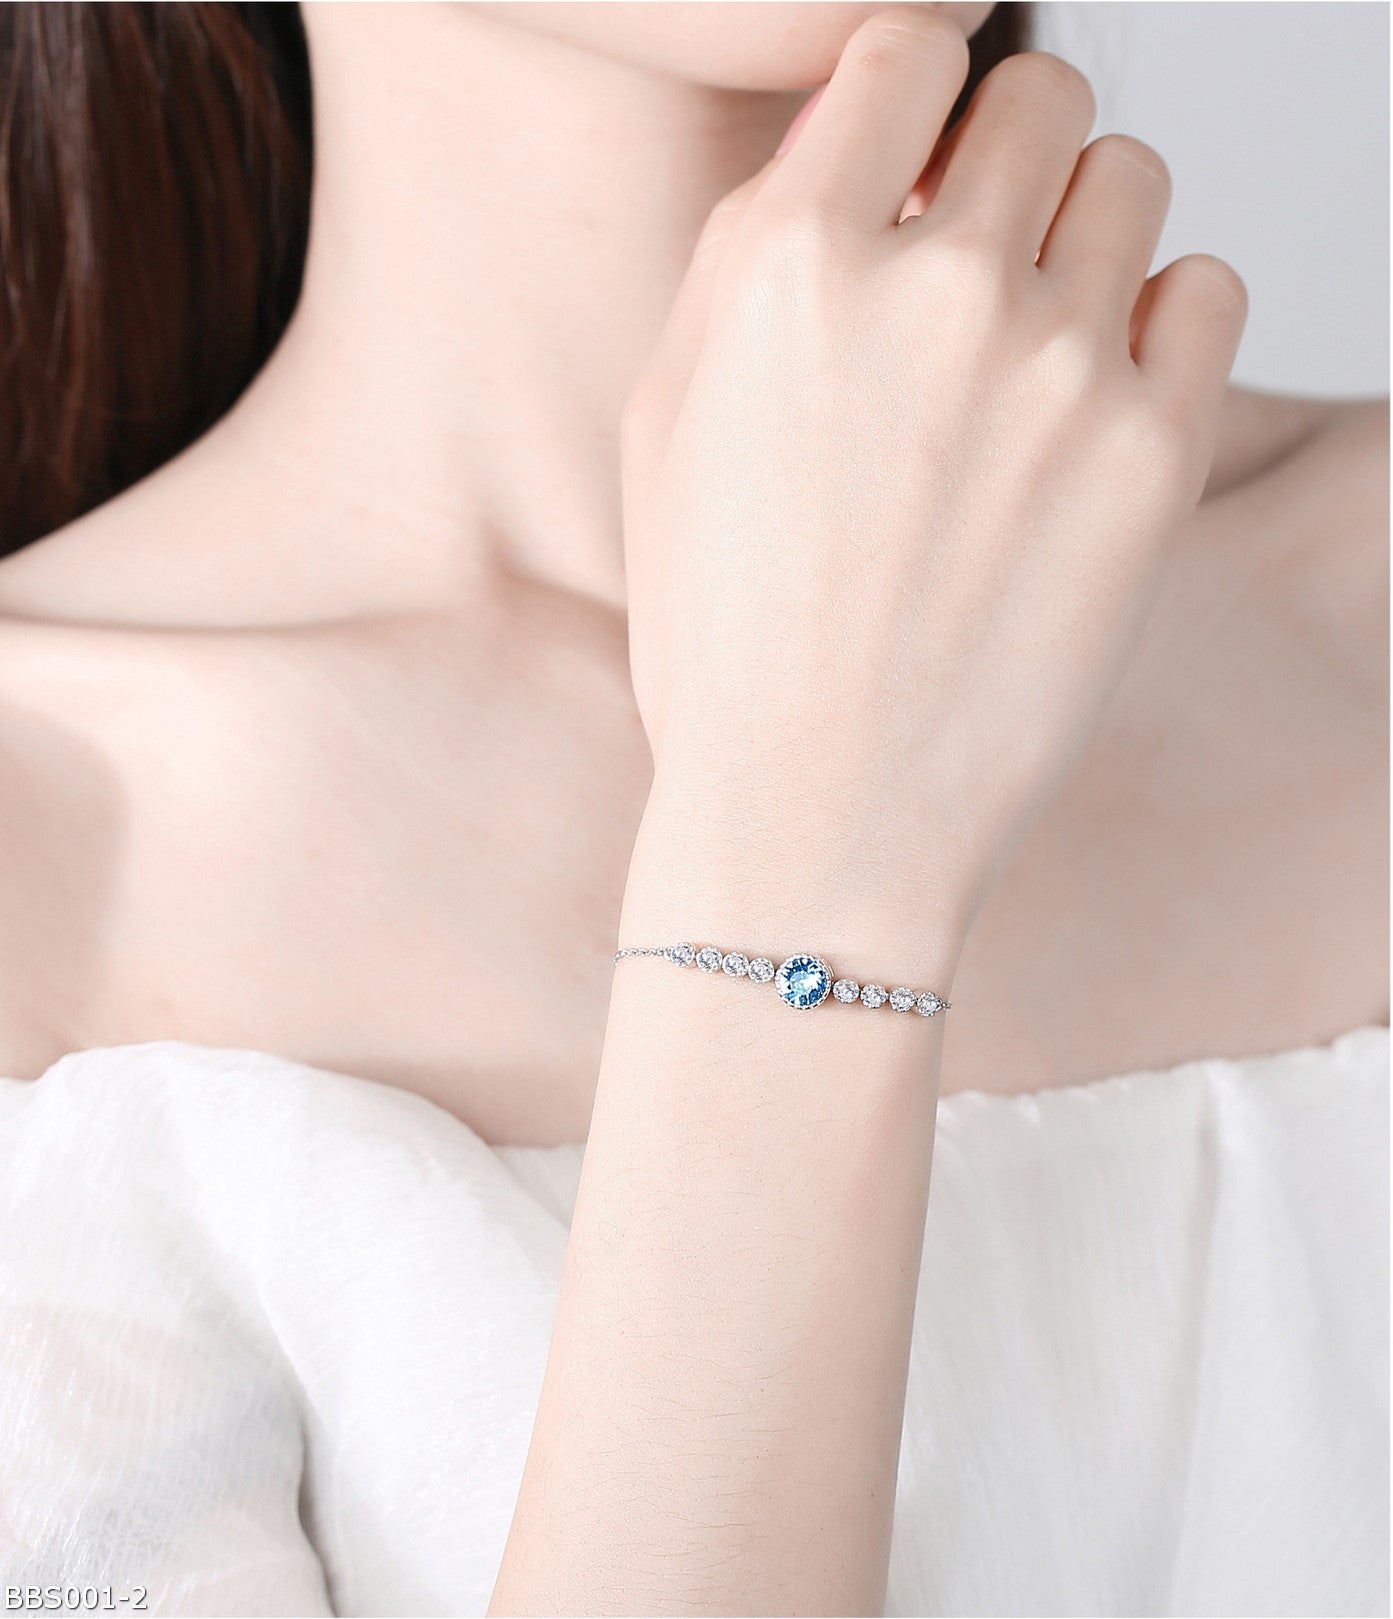 Crystal ocean heart bracelet